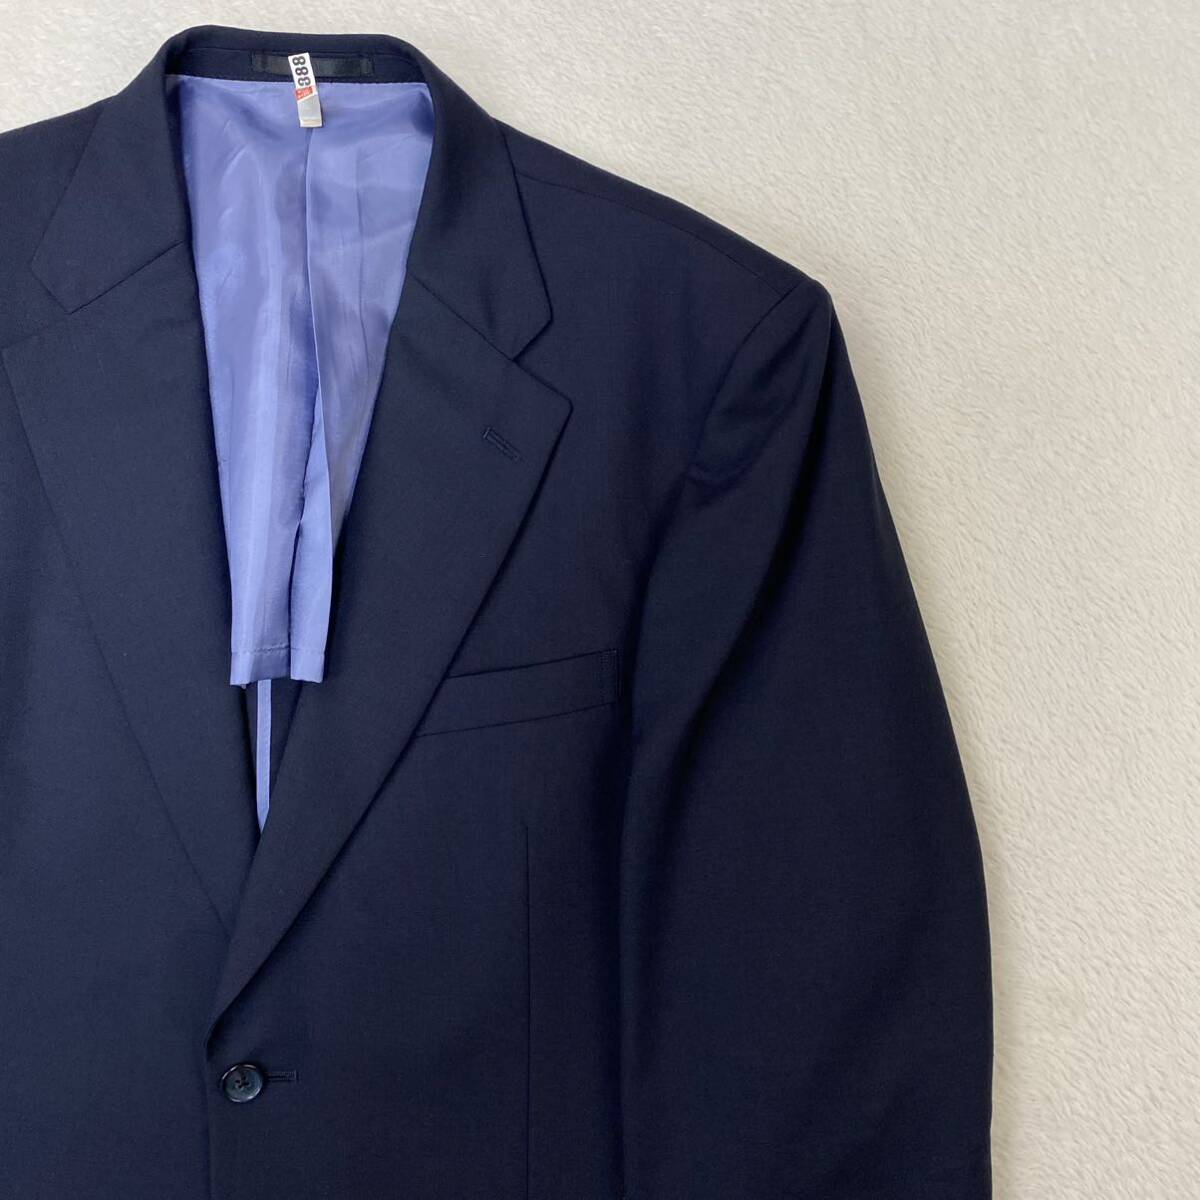 ALPHA NIKKE アルファニッケ 上下セットアップスーツ 紳士服 ウール100% ネイビースーツ シングル ビジネス 入学式 大きいサイズの画像3